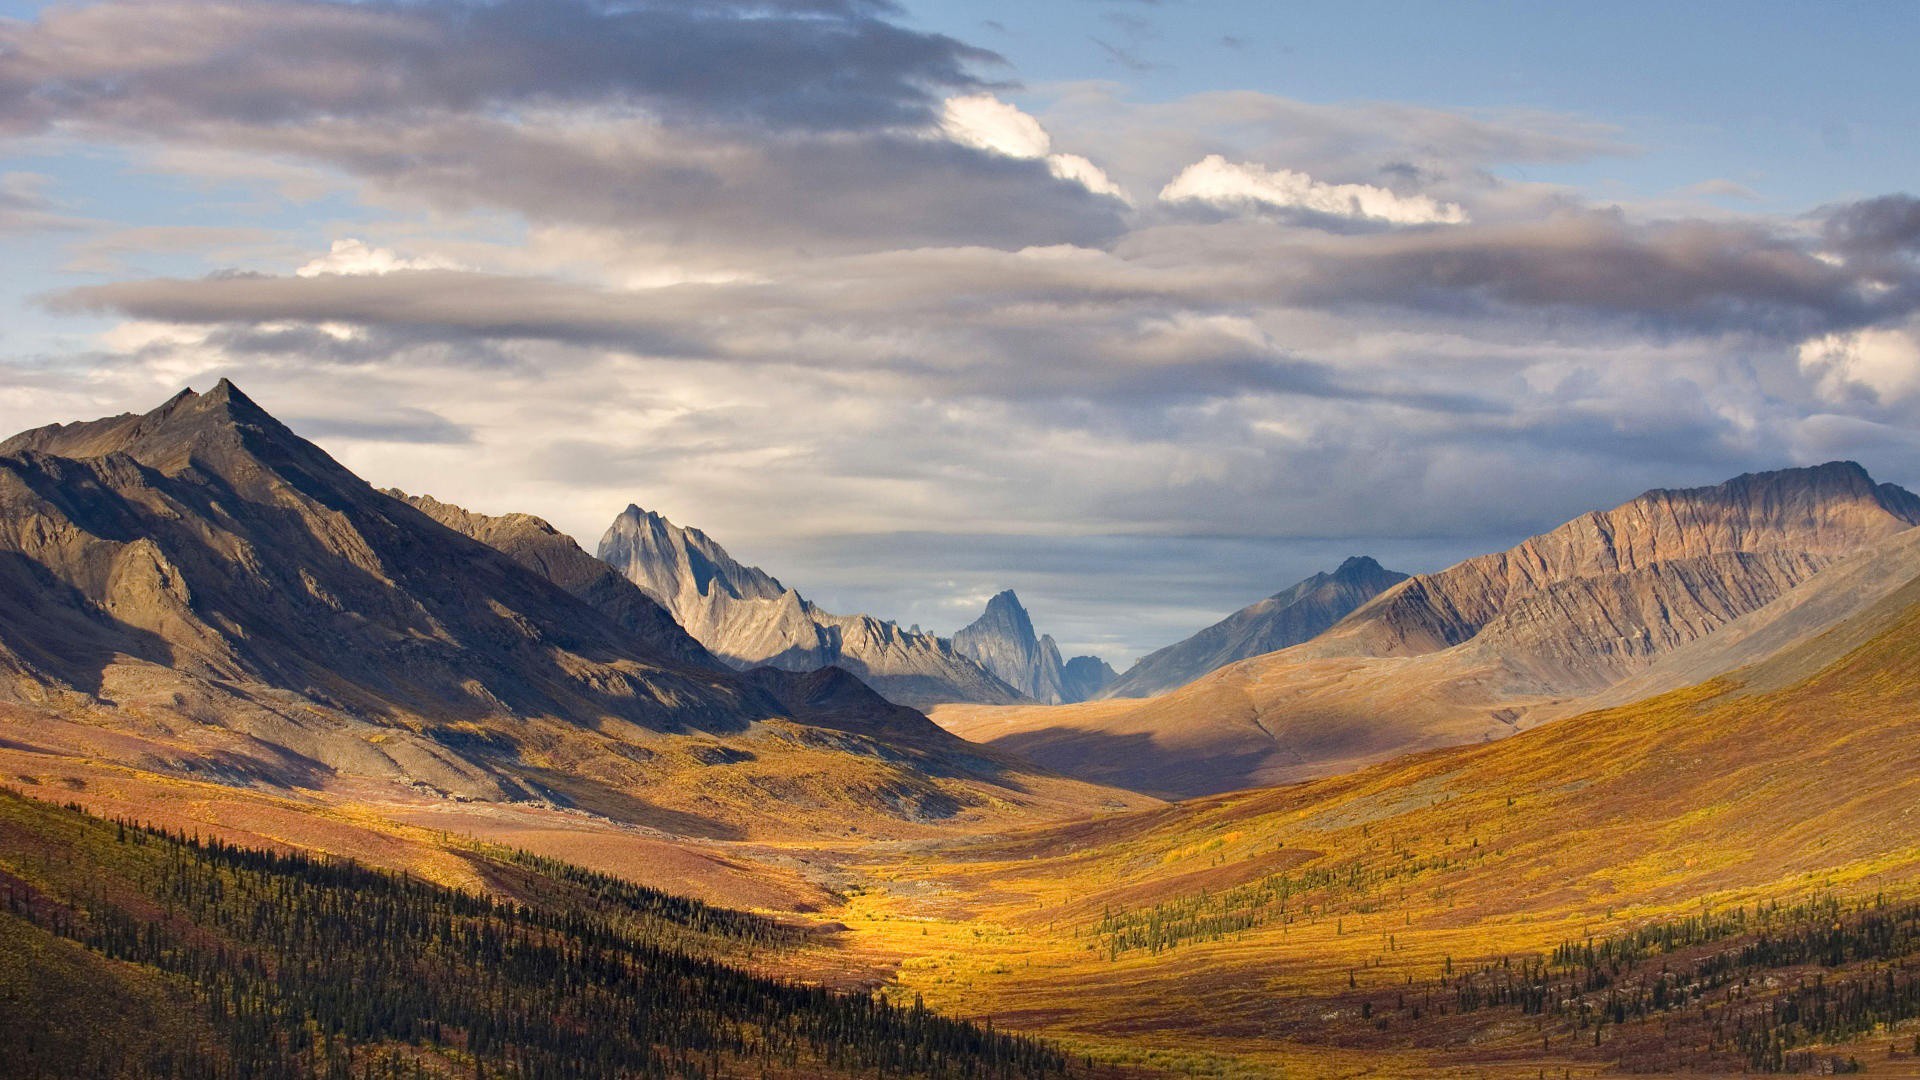 General 1920x1080 nature landscape mountains valley Alaska nordic landscapes outdoors